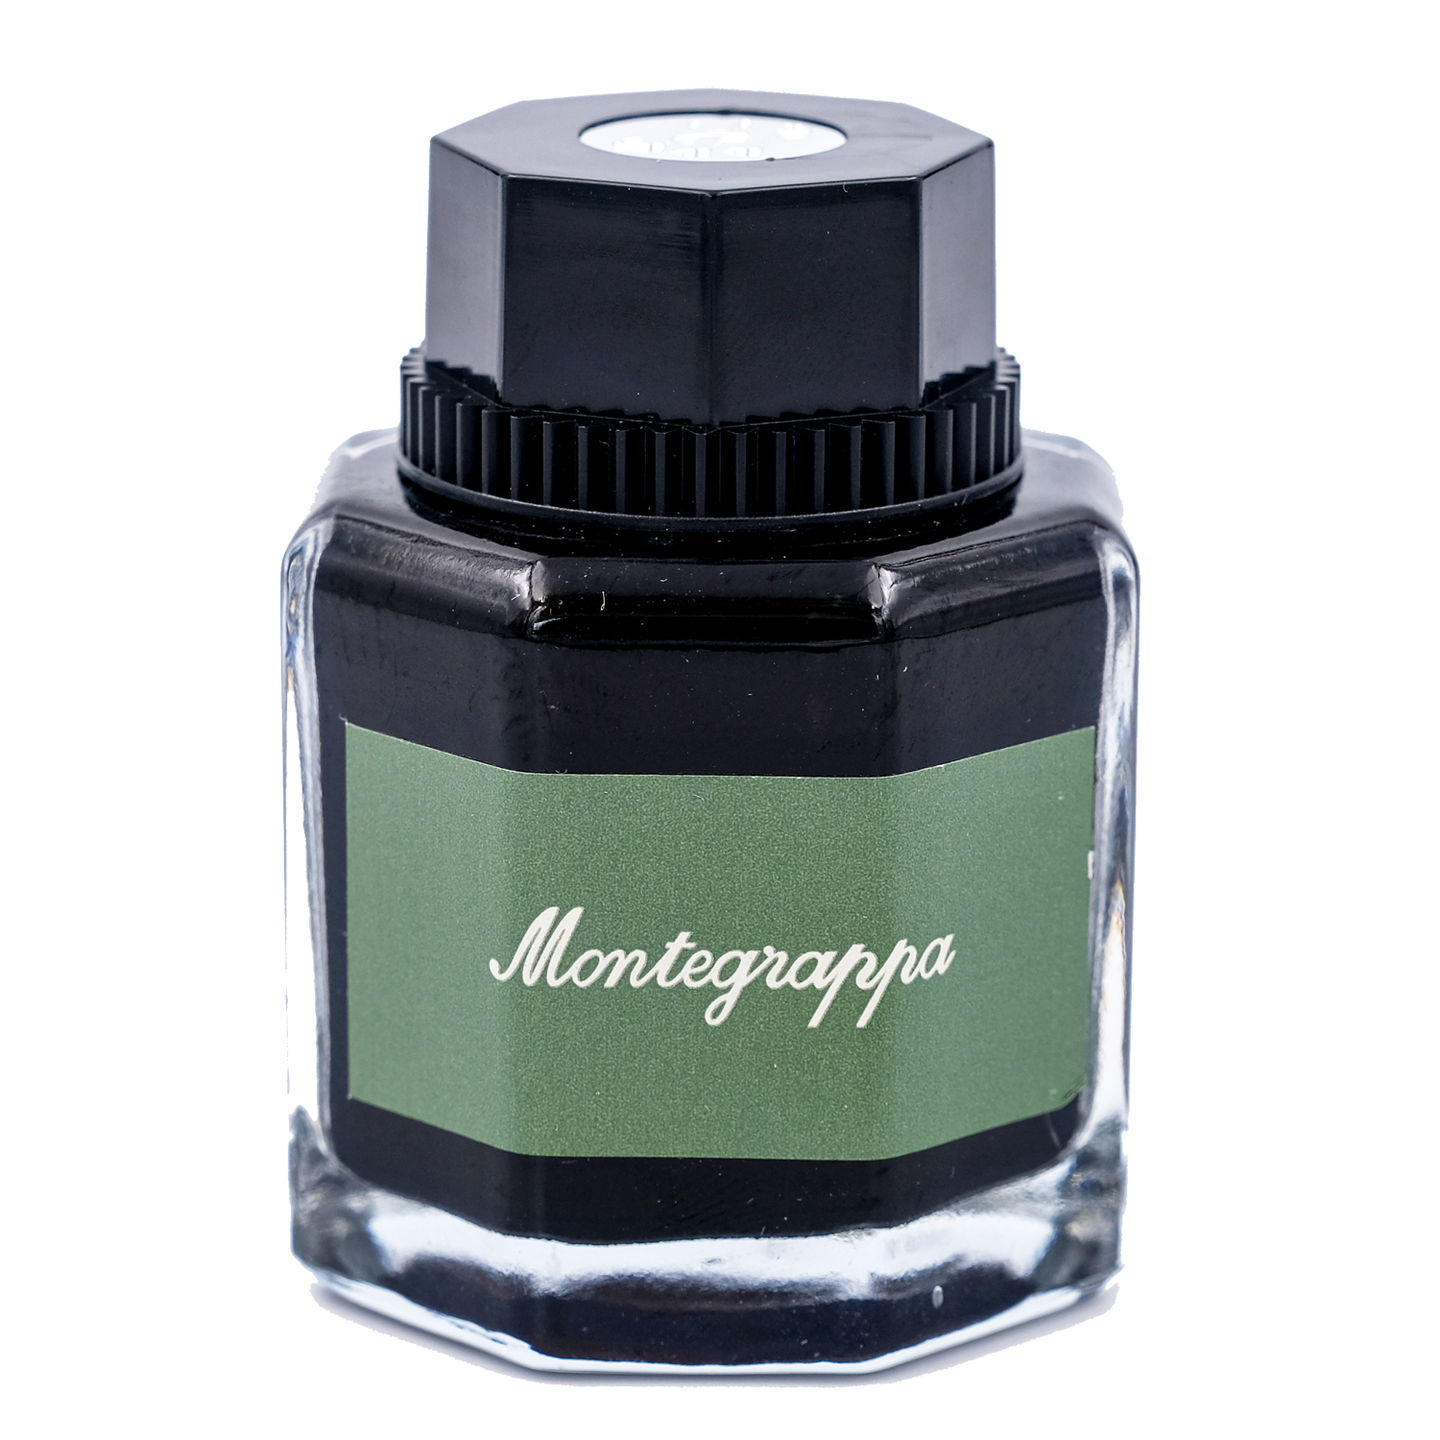 Montegrappa Tinte Black 50ml - Green packaging